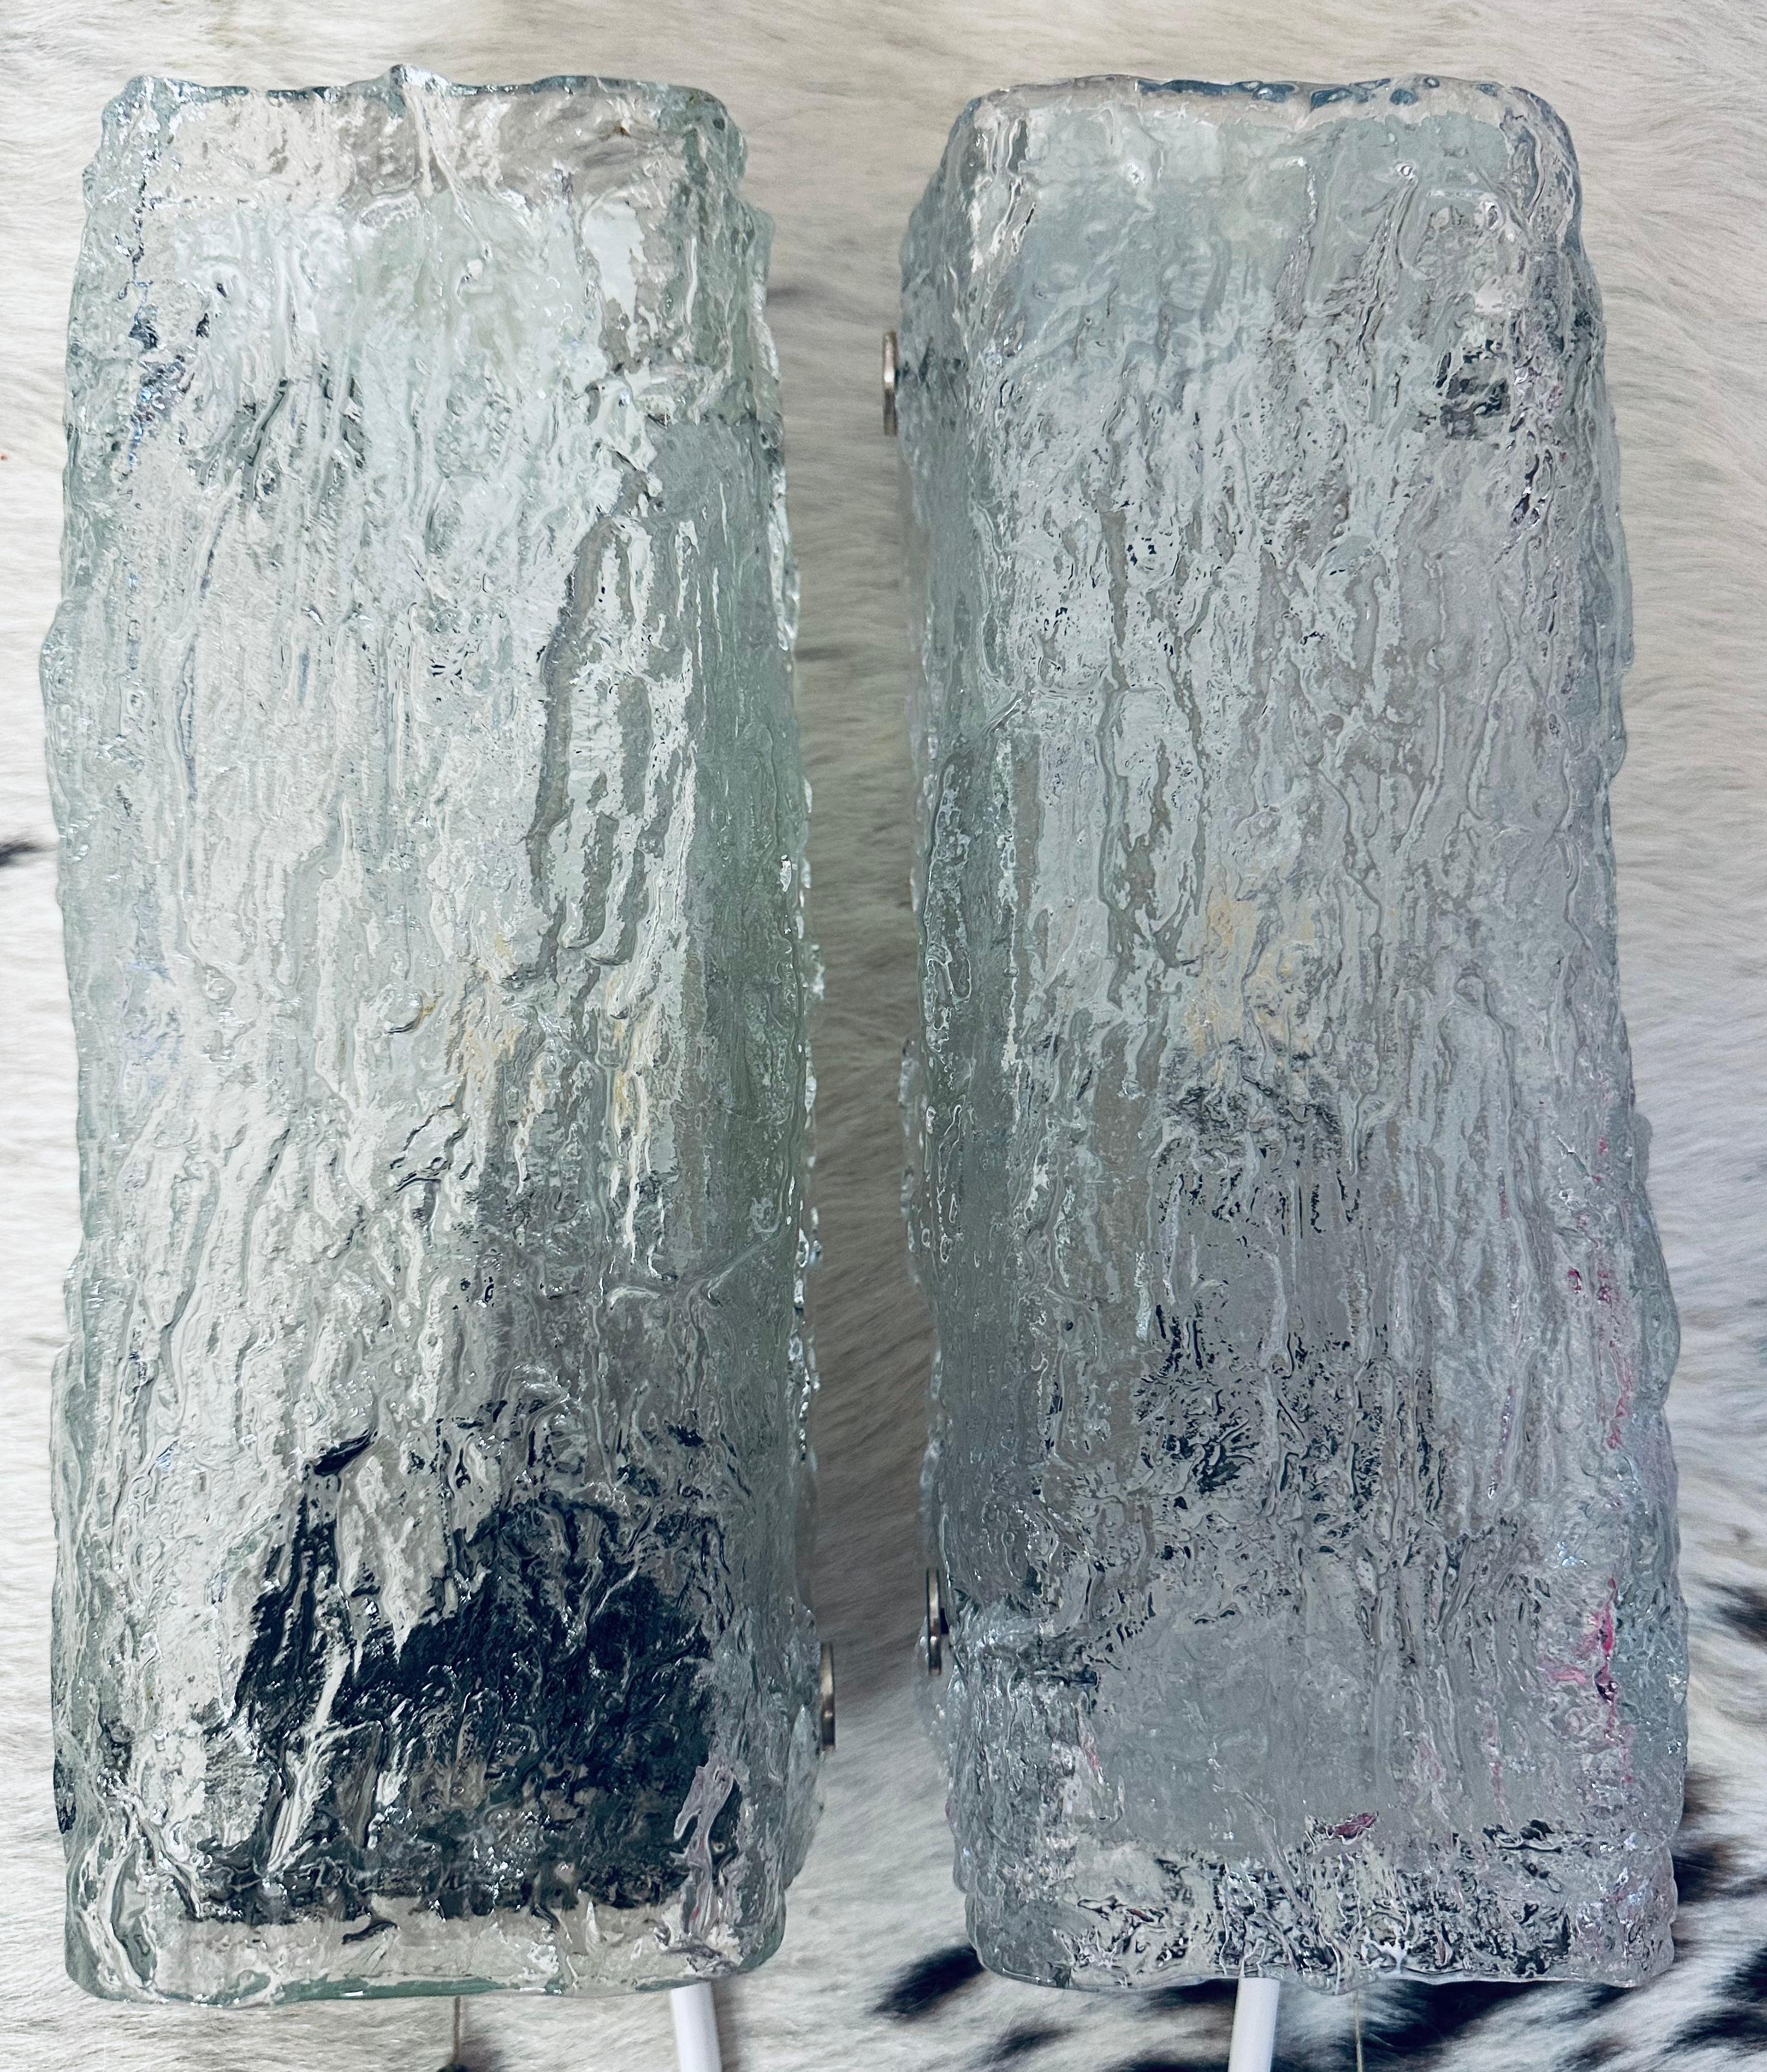 Pair of Small 1970s German Kaiser Leuchten Iced Textured Glass Wall Lights For Sale 2